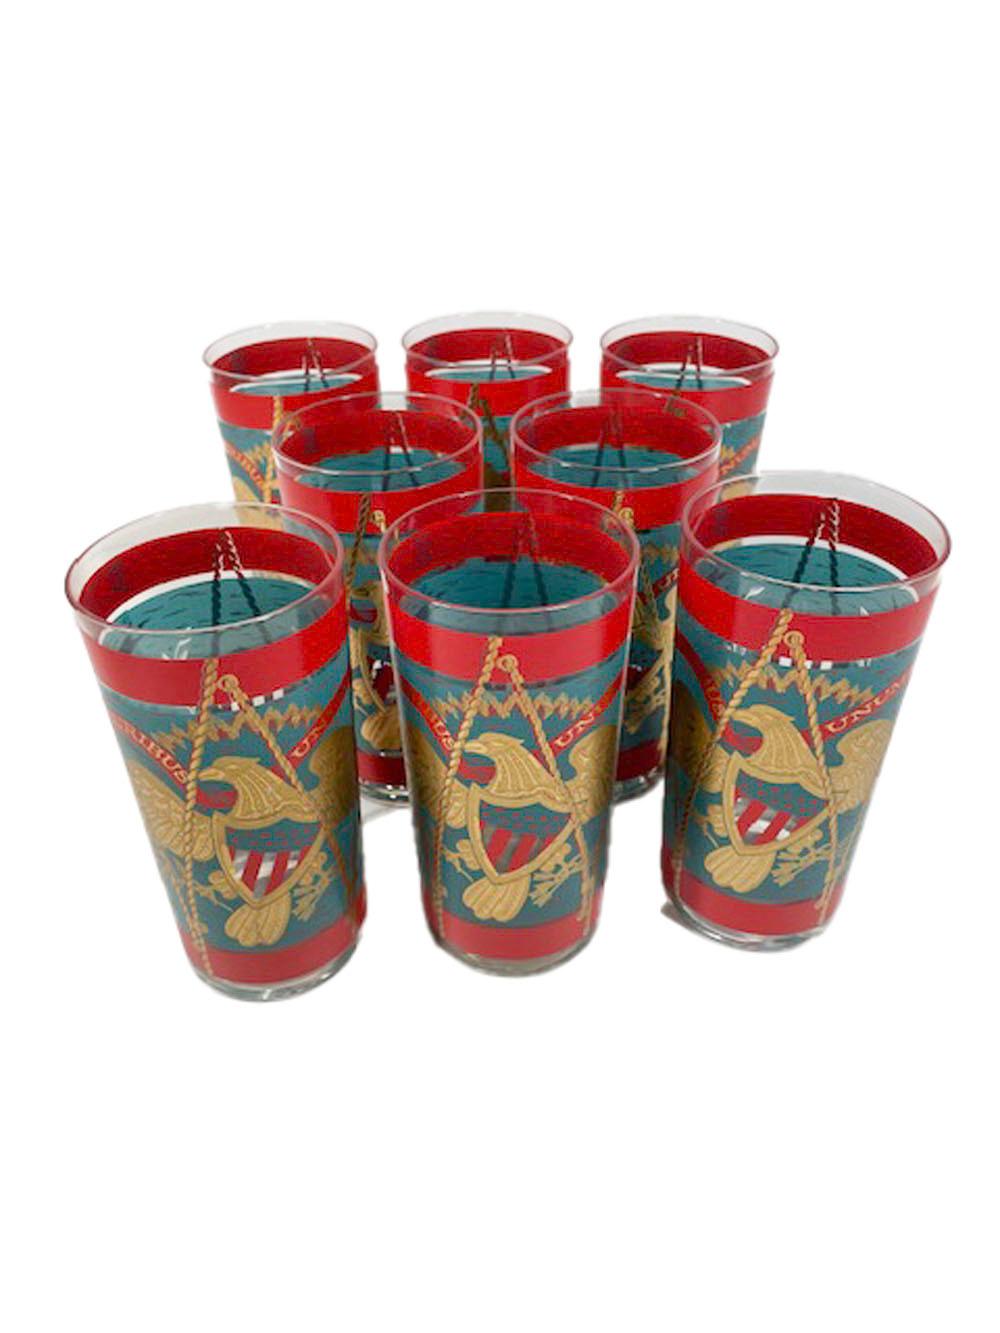 American Vintage Cera Patriotic Drum Highball Glasses in Teal & Red Enamel with 22k Gold For Sale